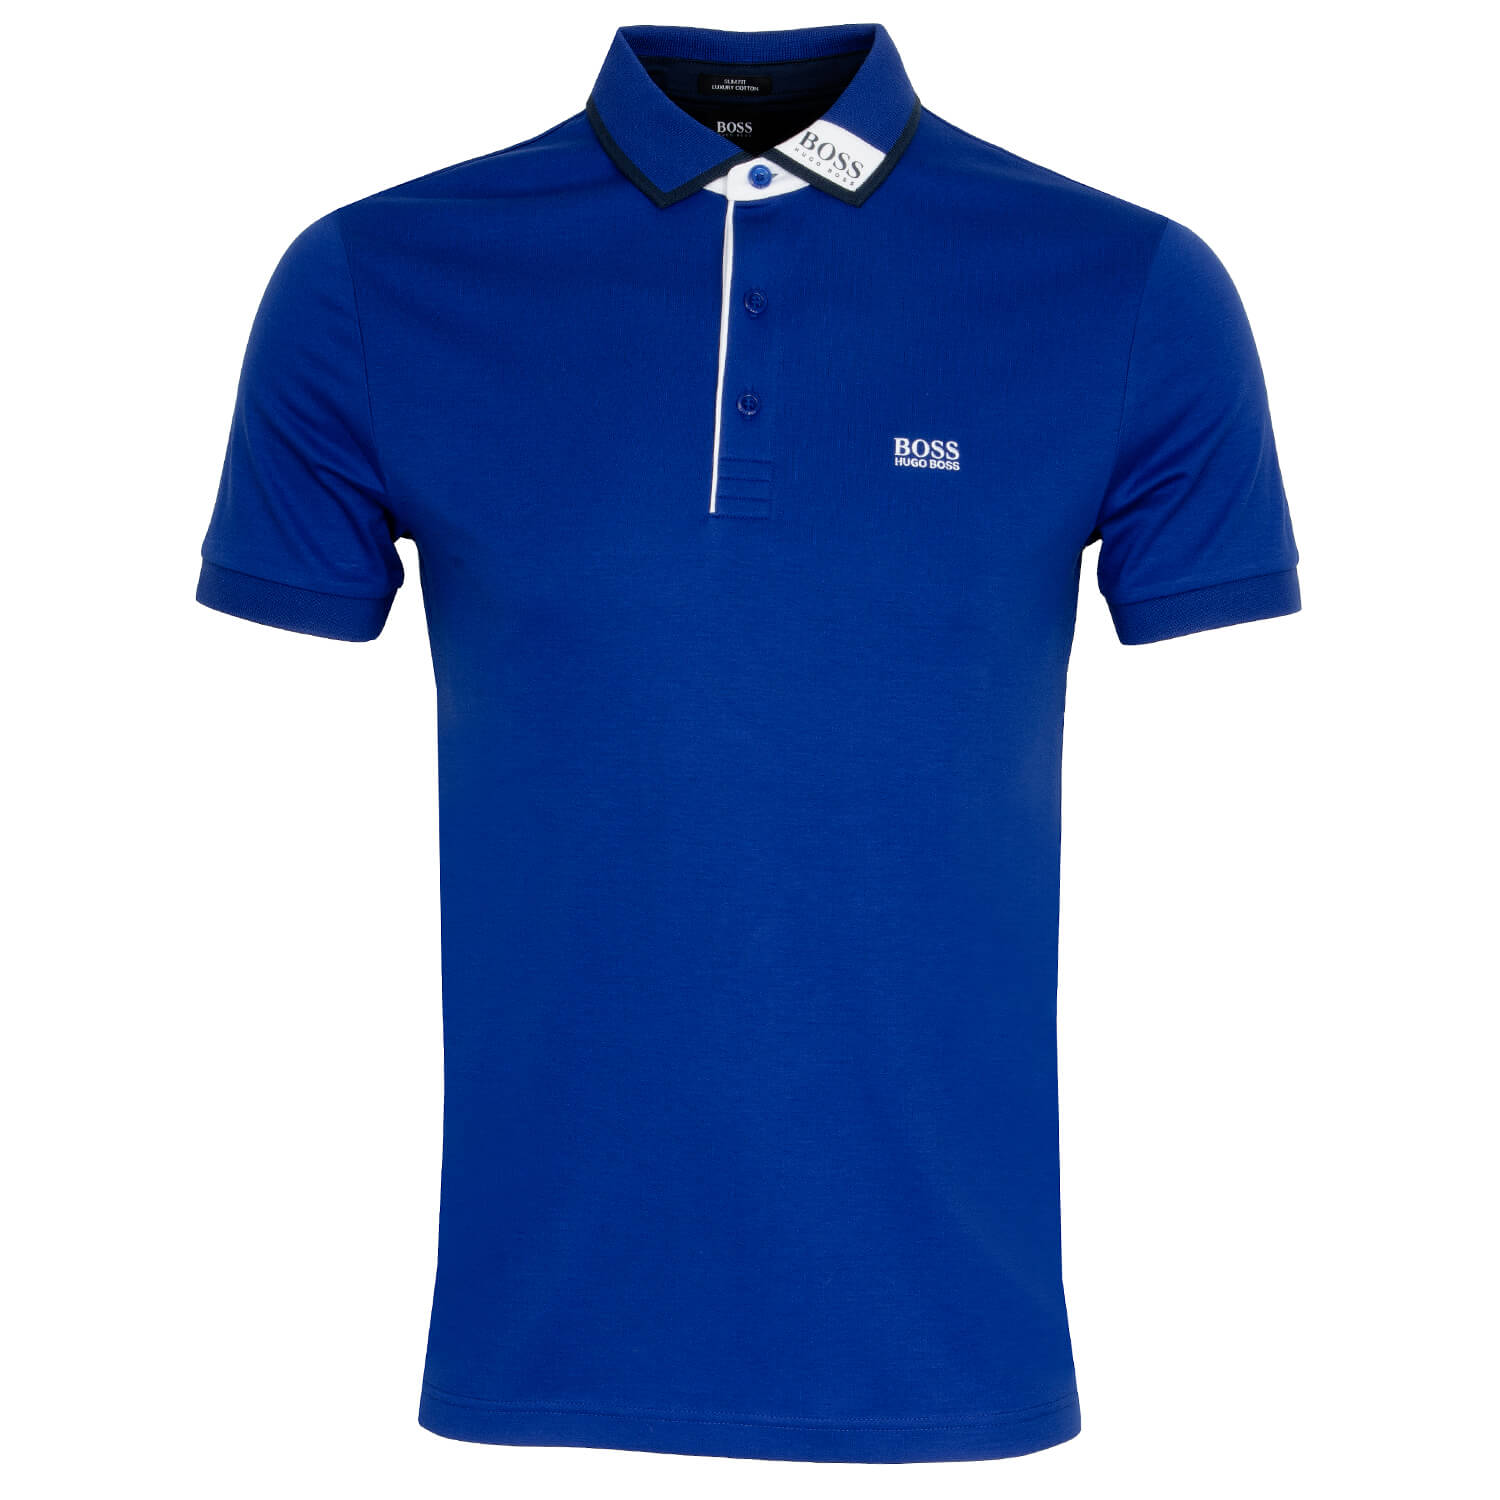 HUGO BOSS Paule 1 Polo Shirt Bright Blue 438 | Scottsdale Golf